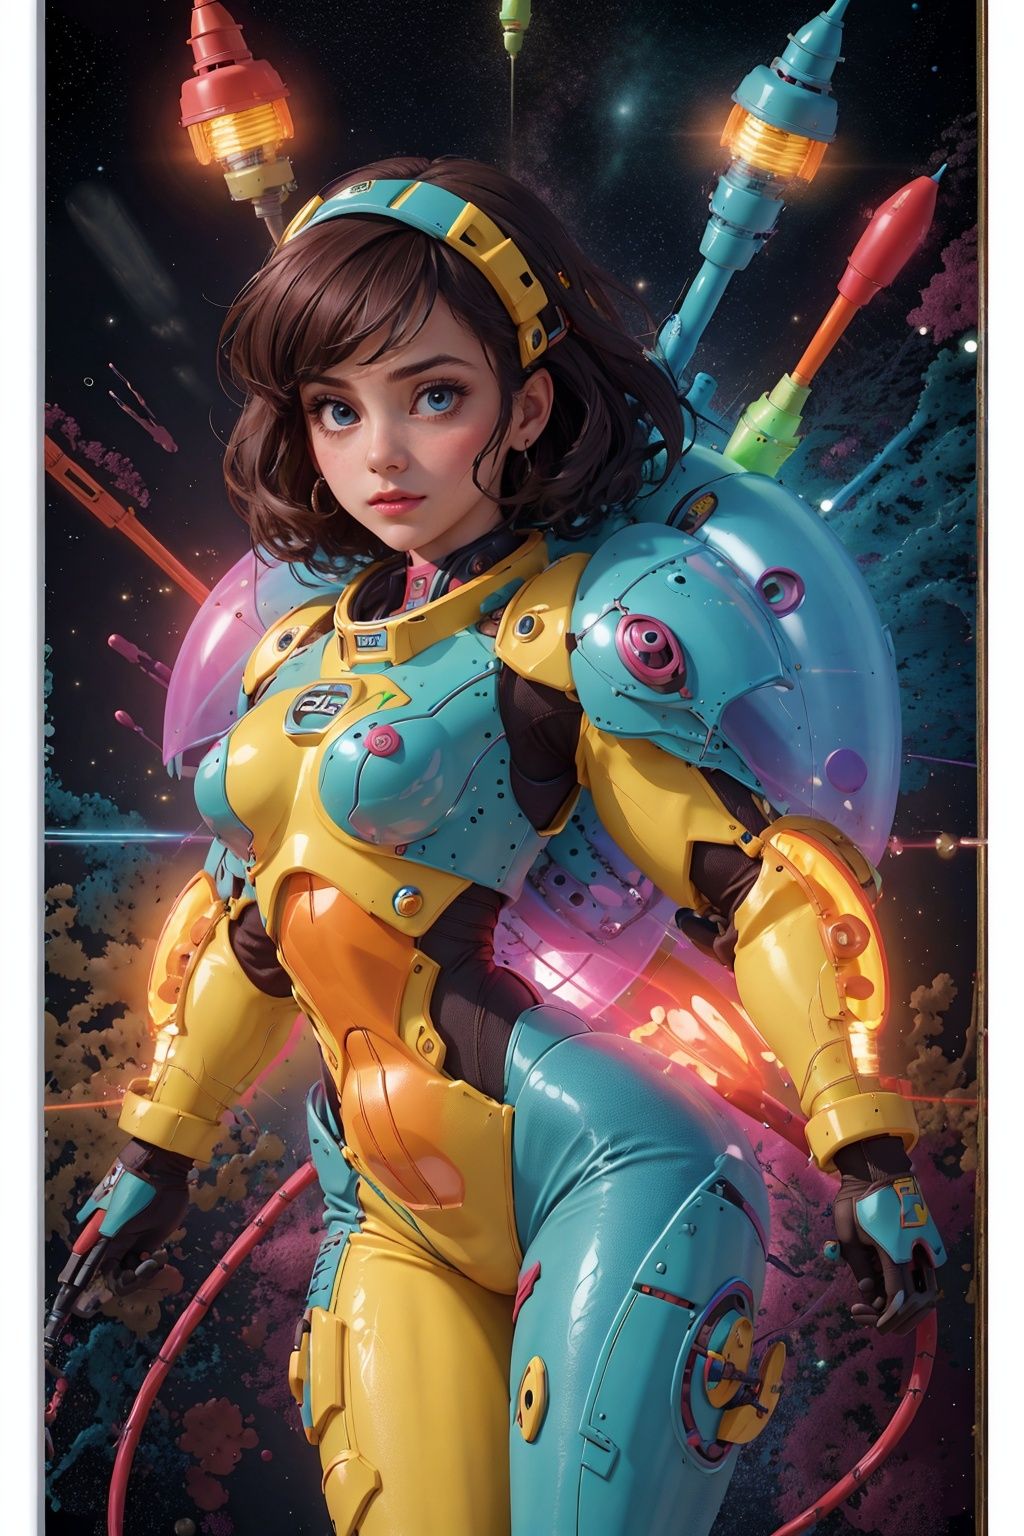 a girl,cuteg,multicolored background,mechuragi,PVC casing,Transparent plastic shell,Luminous Machinery Core,Dynamic pose,Space Background,masterpiece,Highest quality,32k,8k,Pixar